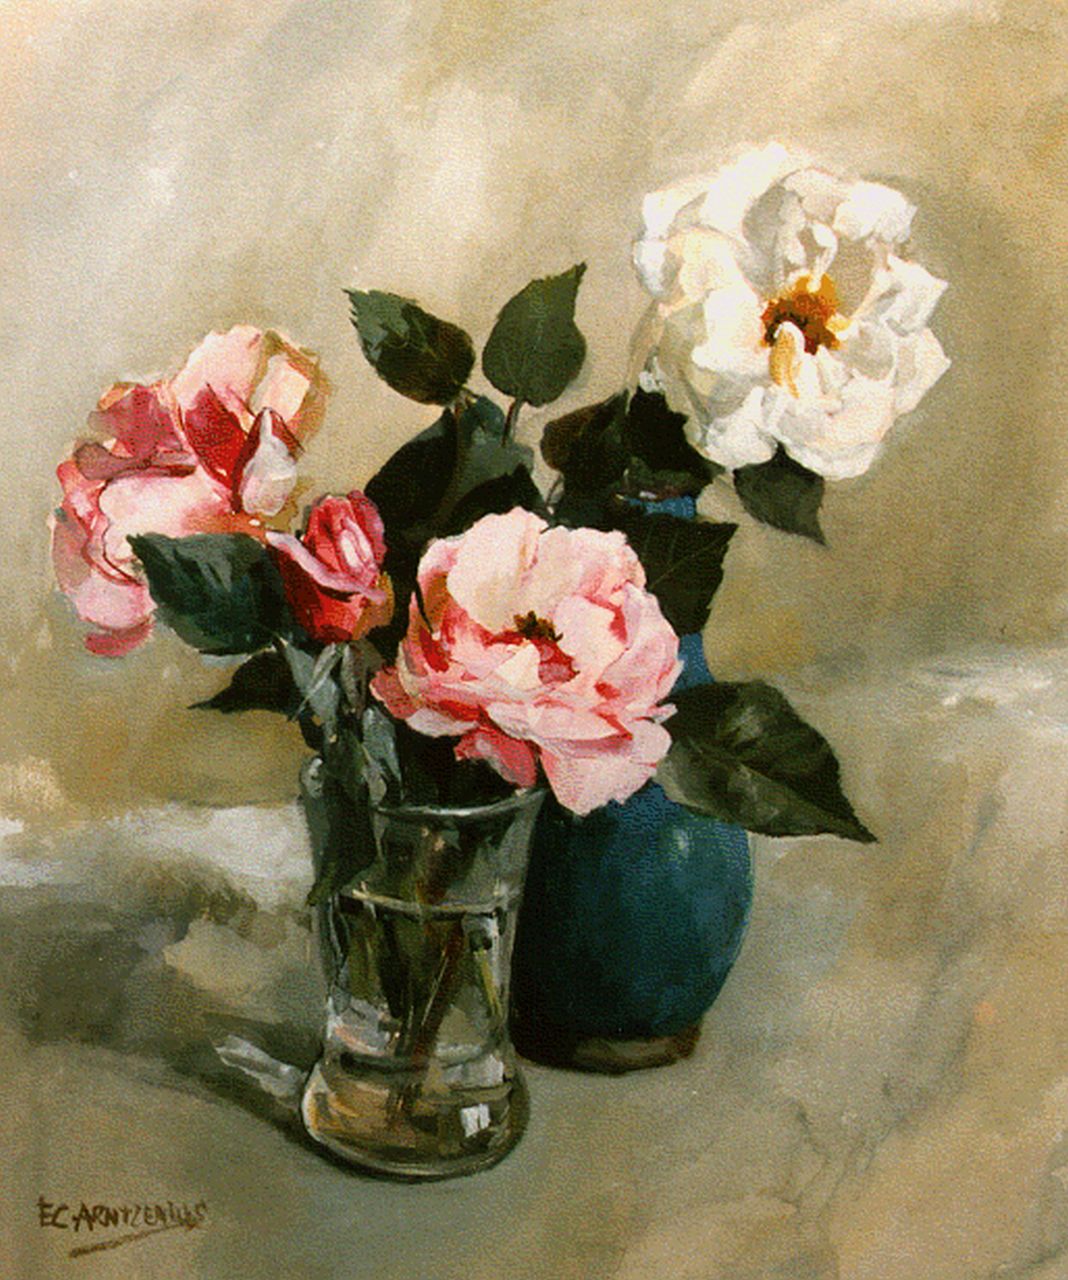 Arntzenius E.C.  | Elise Claudine Arntzenius, A still life with pink and white roses, Aquarell auf Papier 40,0 x 34,2 cm, signed l.l.